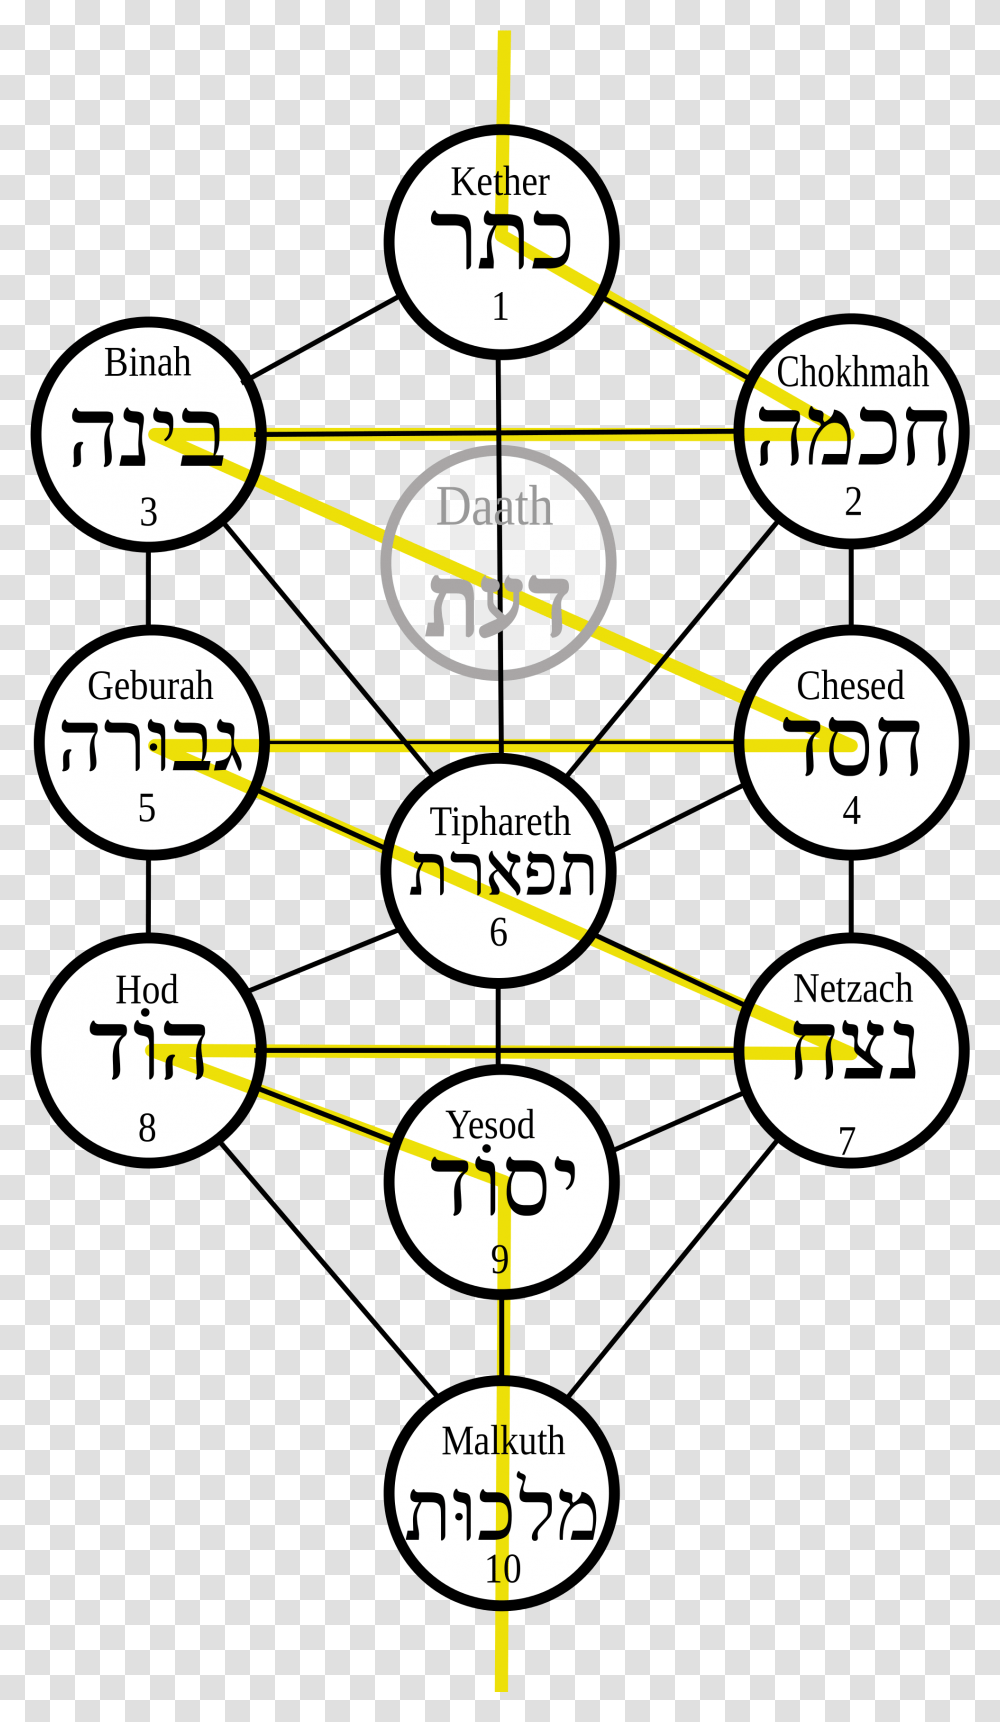 Image Result For Spelling In Hebrew Letters Of Malkuth Kabbalah Tree Of Life Hebrew, Plot, Diagram, Gauge, Flyer Transparent Png